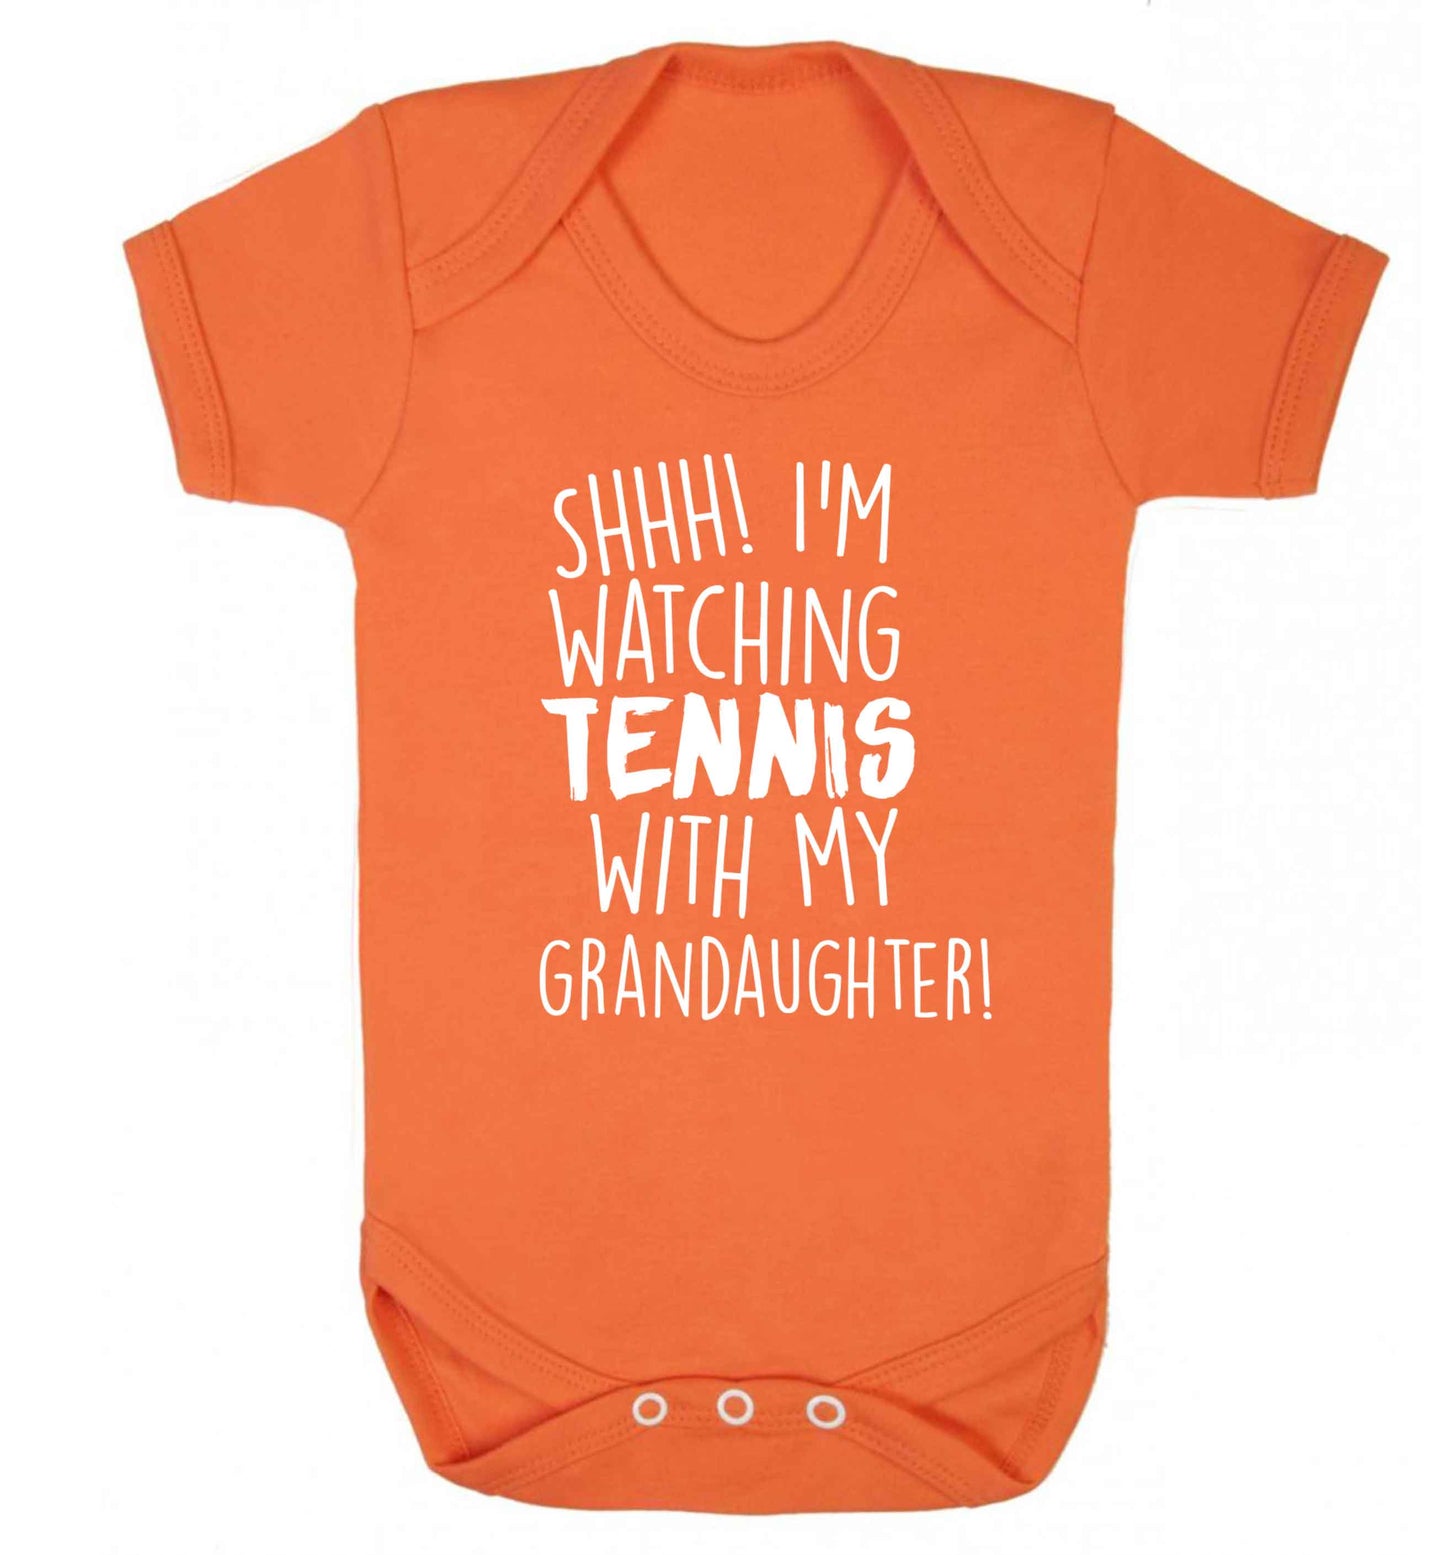 Shh! I'm watching tennis with my granddaughter! Baby Vest orange 18-24 months